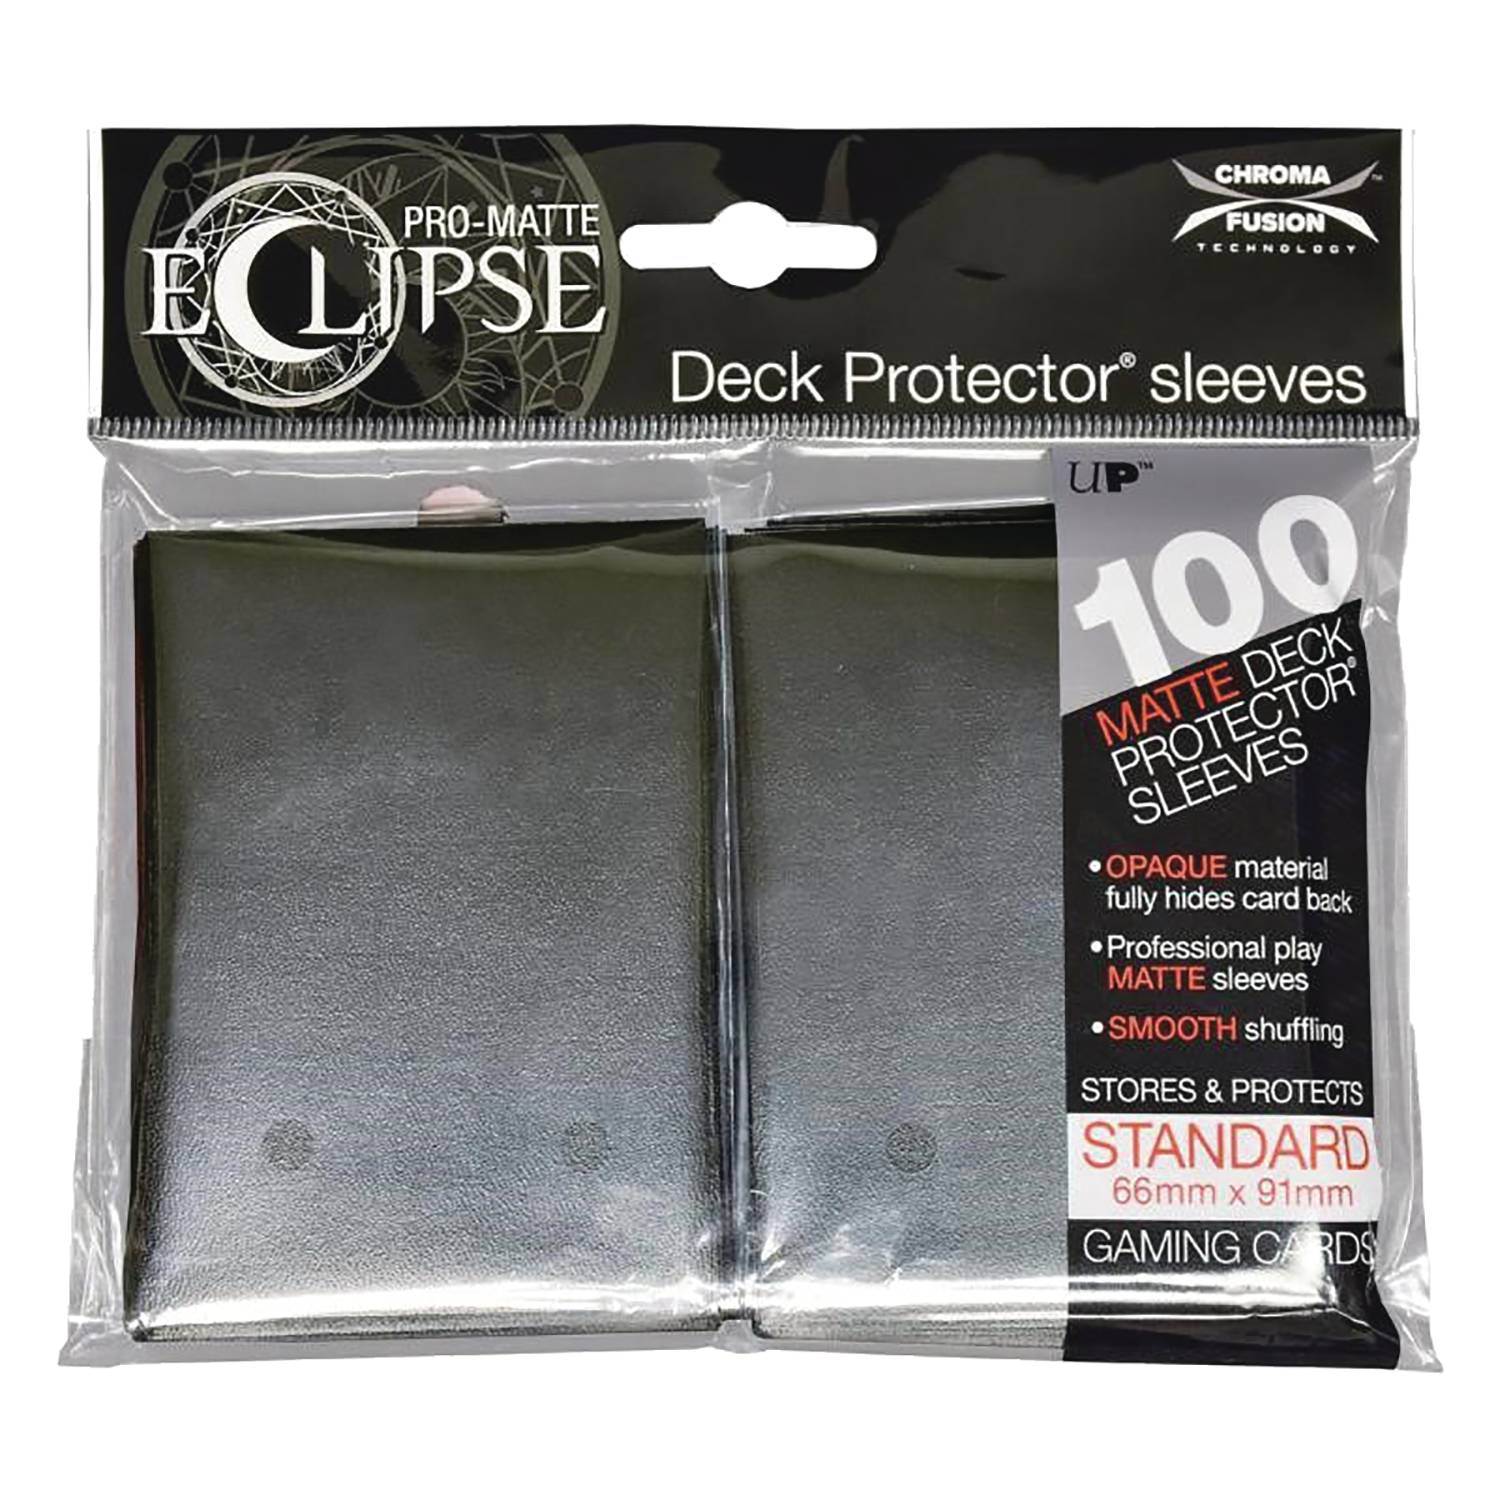 Pro Matte Eclipse 2.0 Deck Protectors Sleeves 100ct Smoke Grey